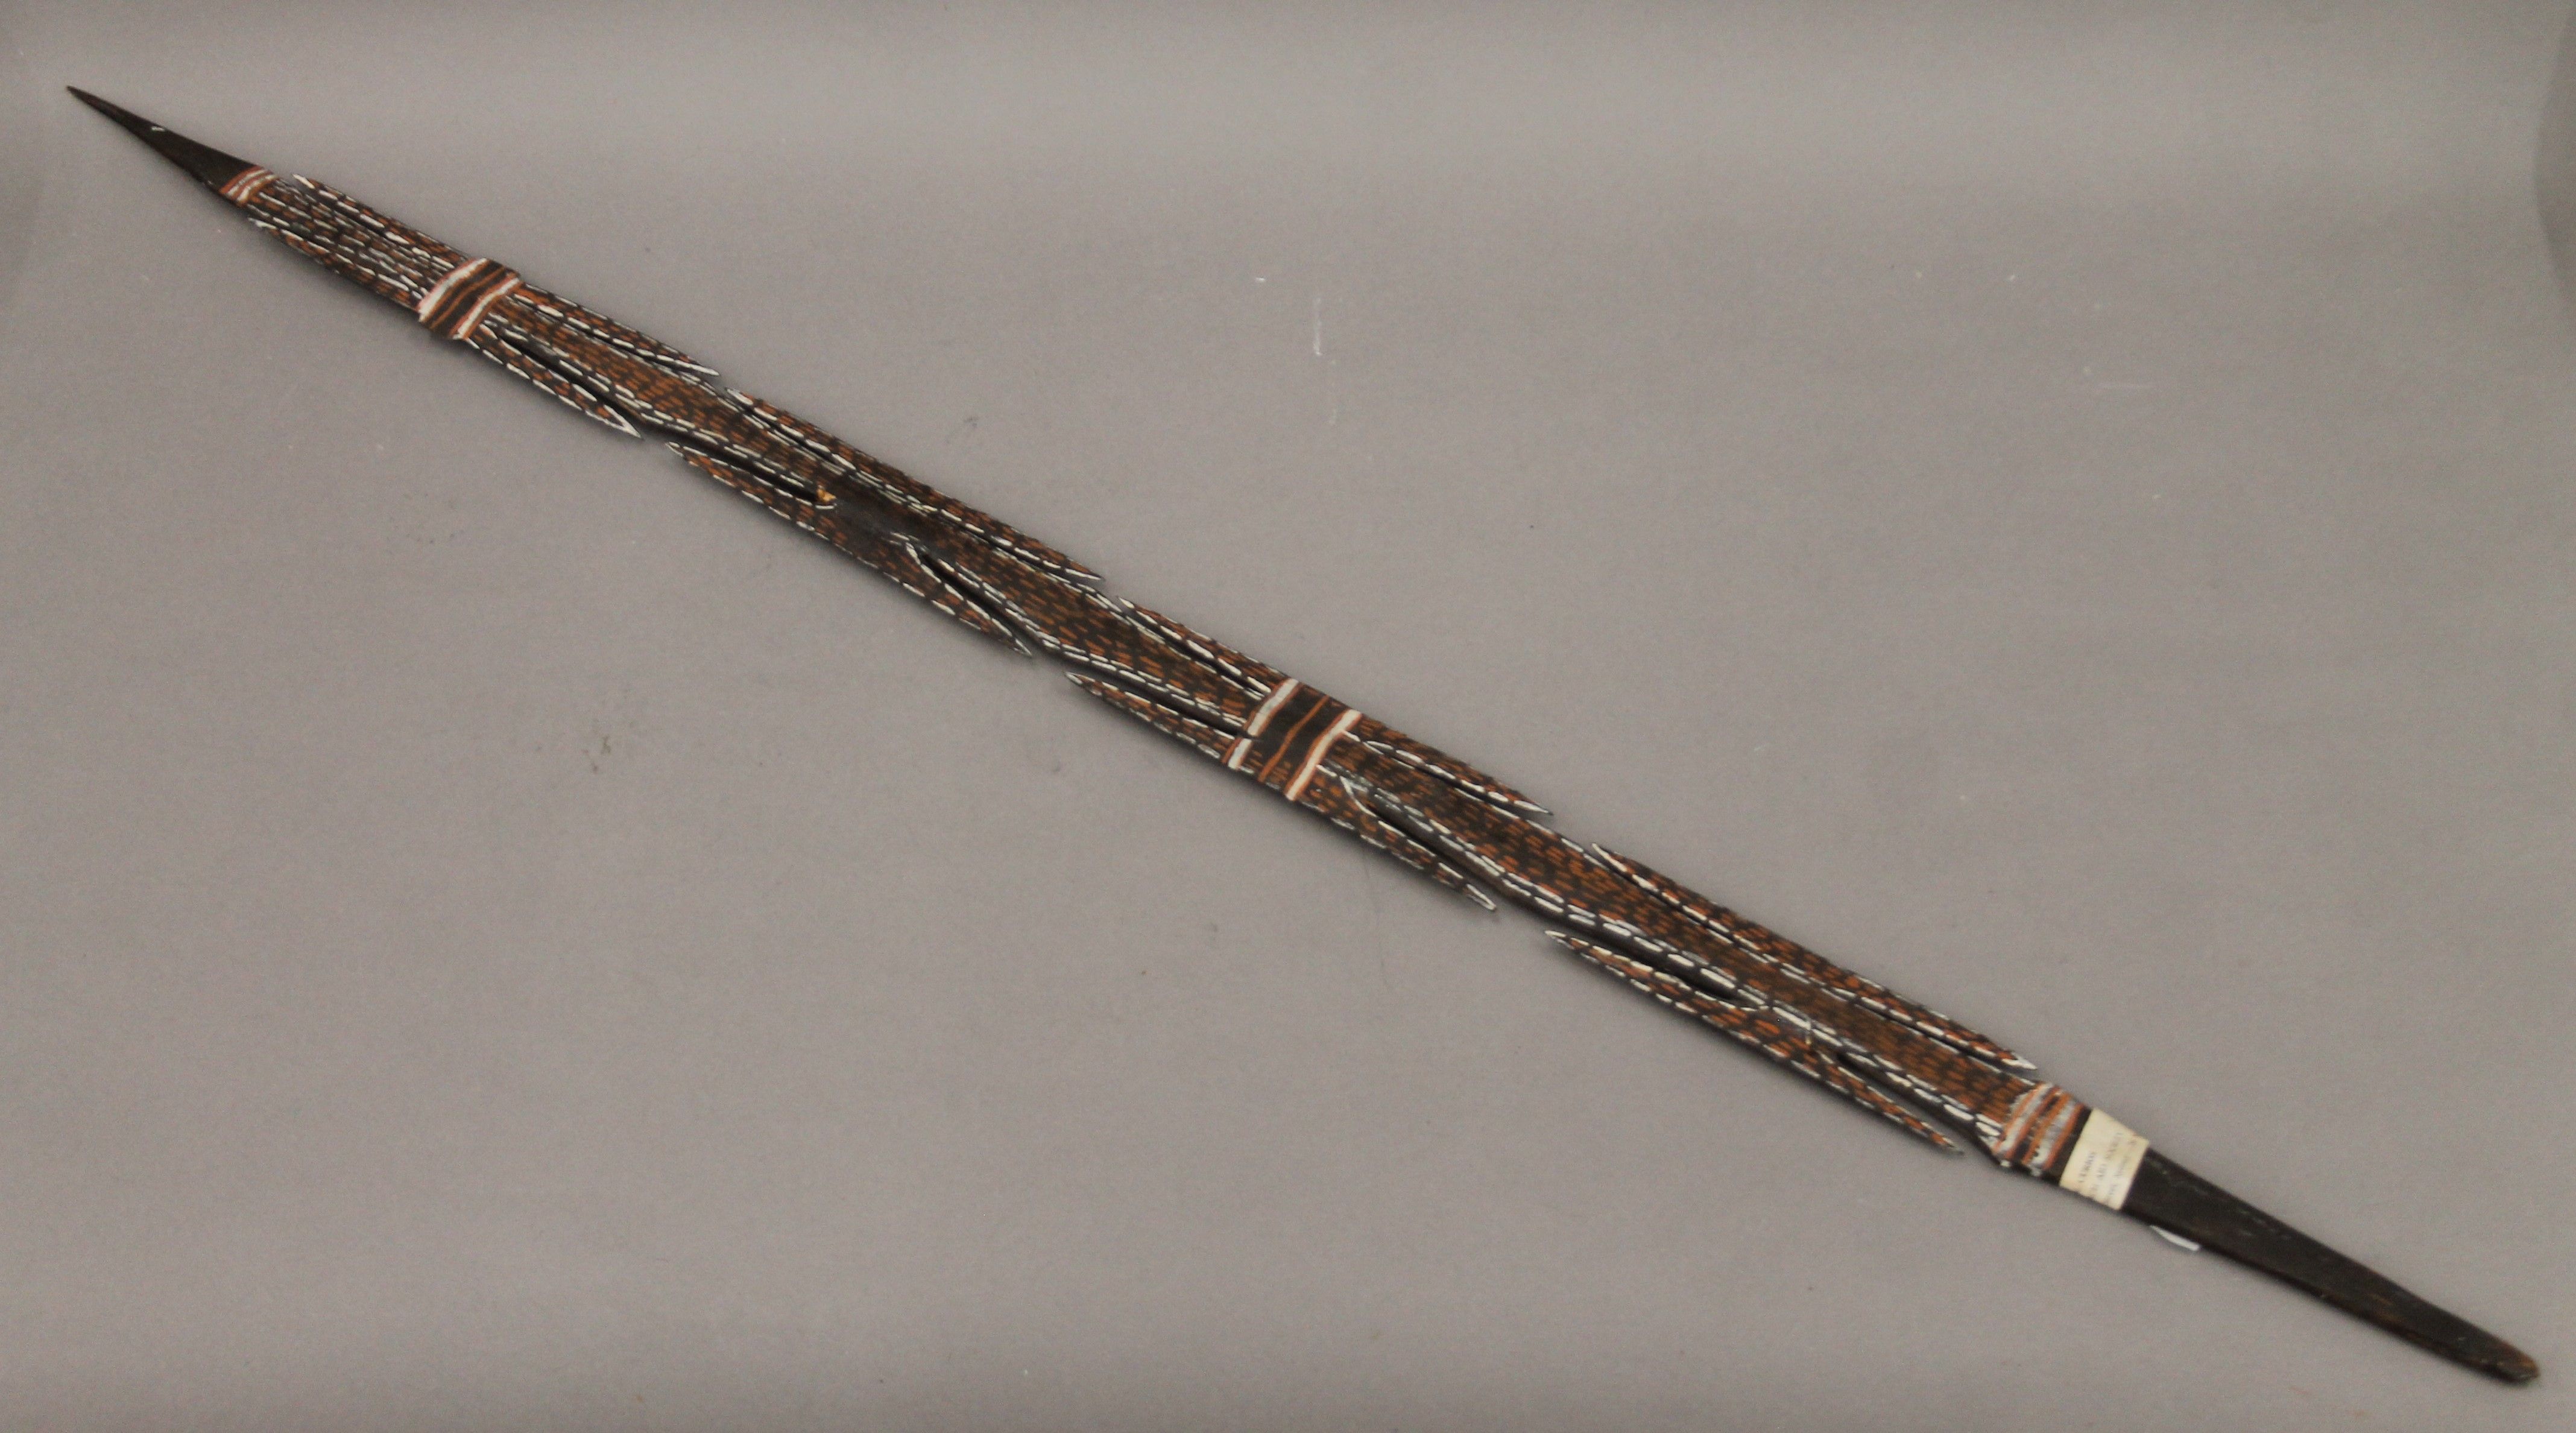 A painted Aboriginal spear. 105.5 cm long.